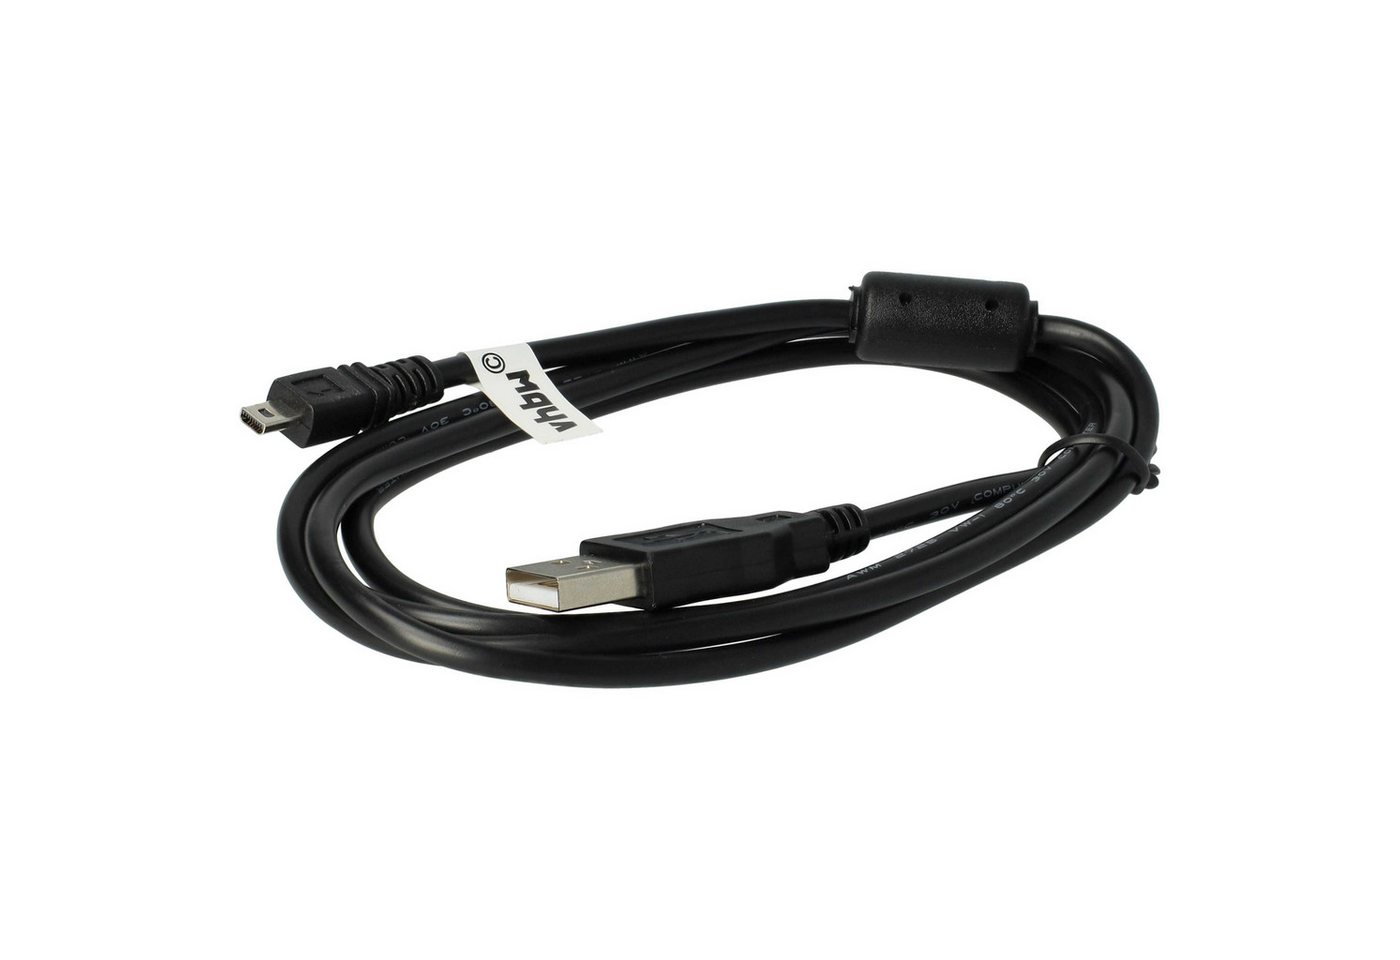 vhbw passend für Panasonic Lumix DMC-FS33, DMC-FS35, DMC-FS35 USB-Kabel von vhbw